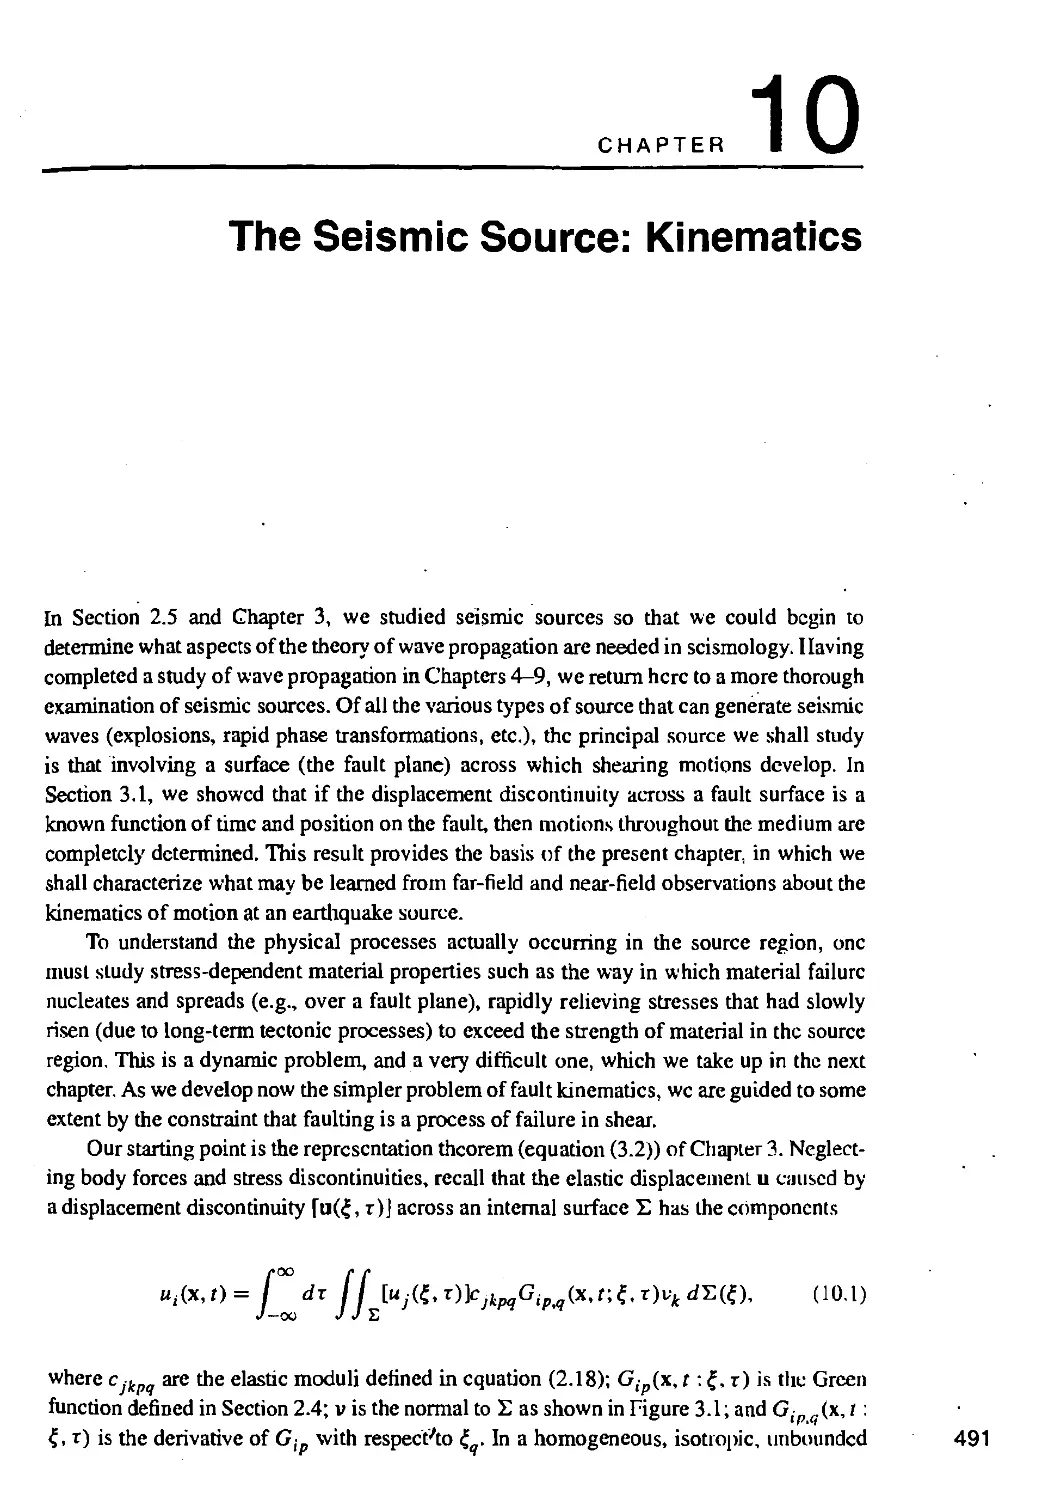 10. THE SEISMIC SOURCE: KINEMATICS